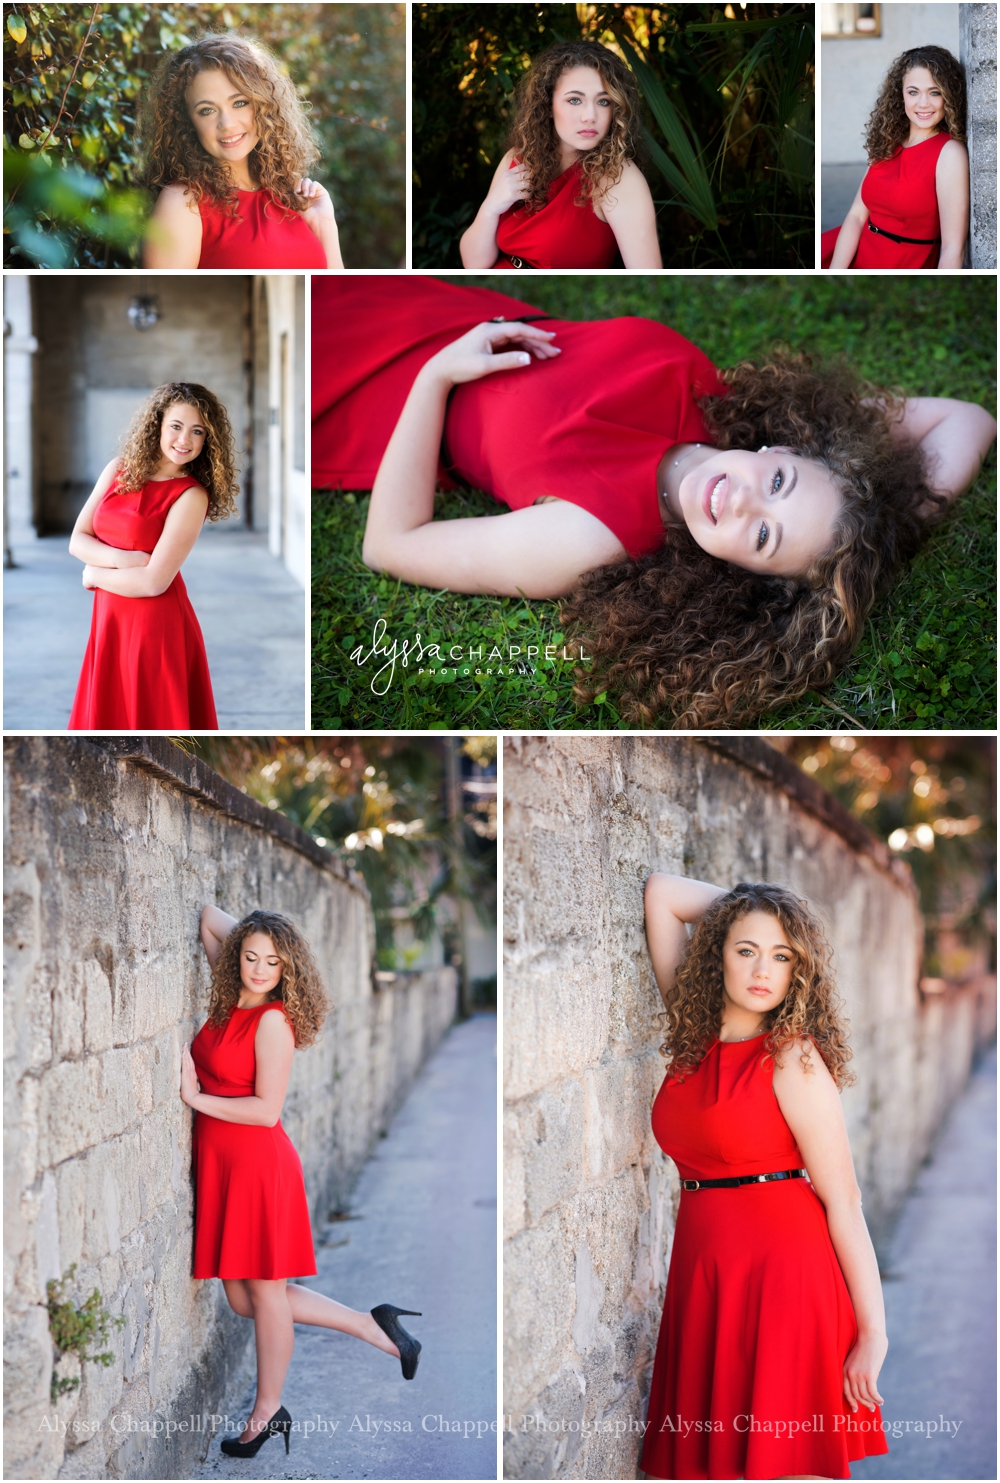 Senior_Portrait_Alyssa Chappell Photography 4